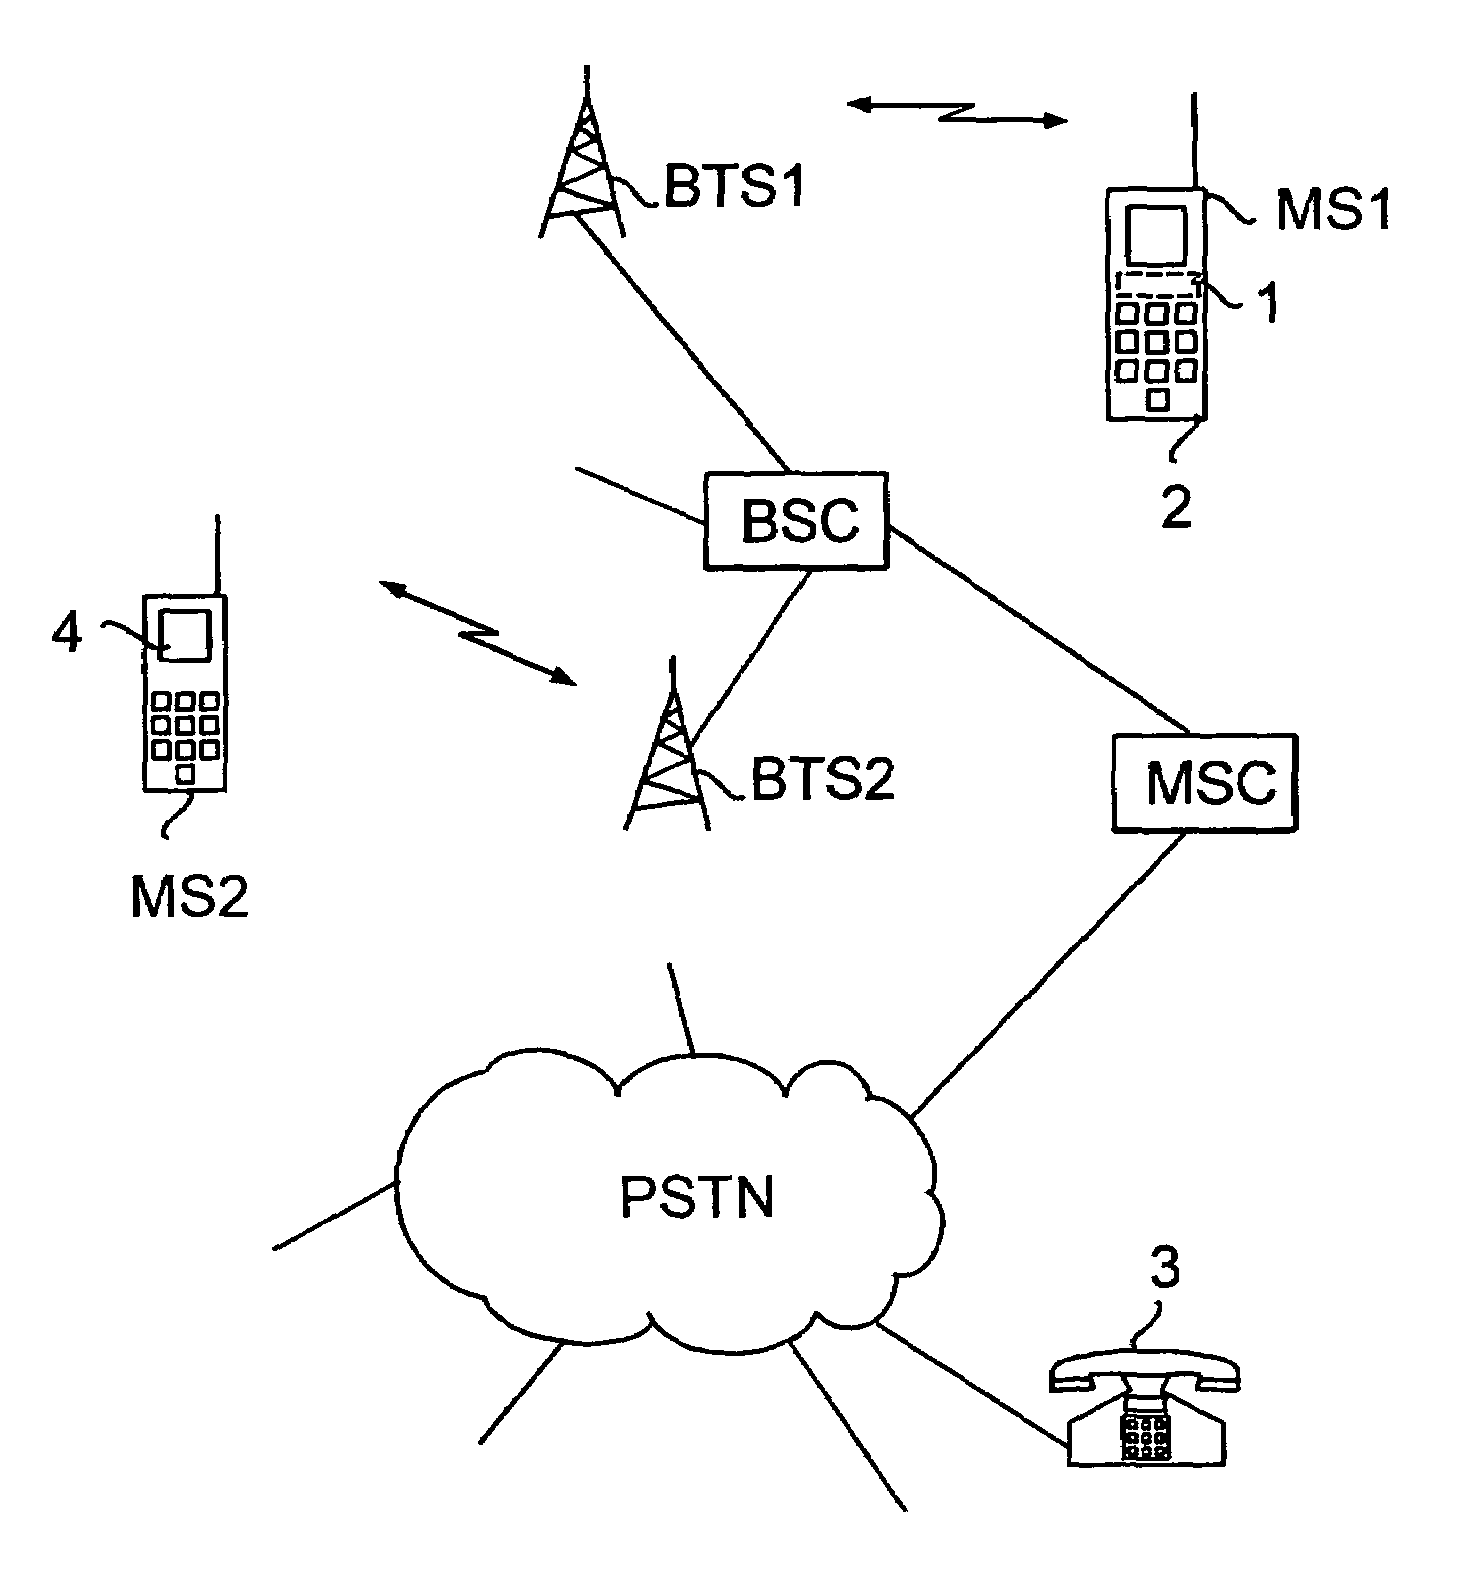 Transmission of information during call establishment